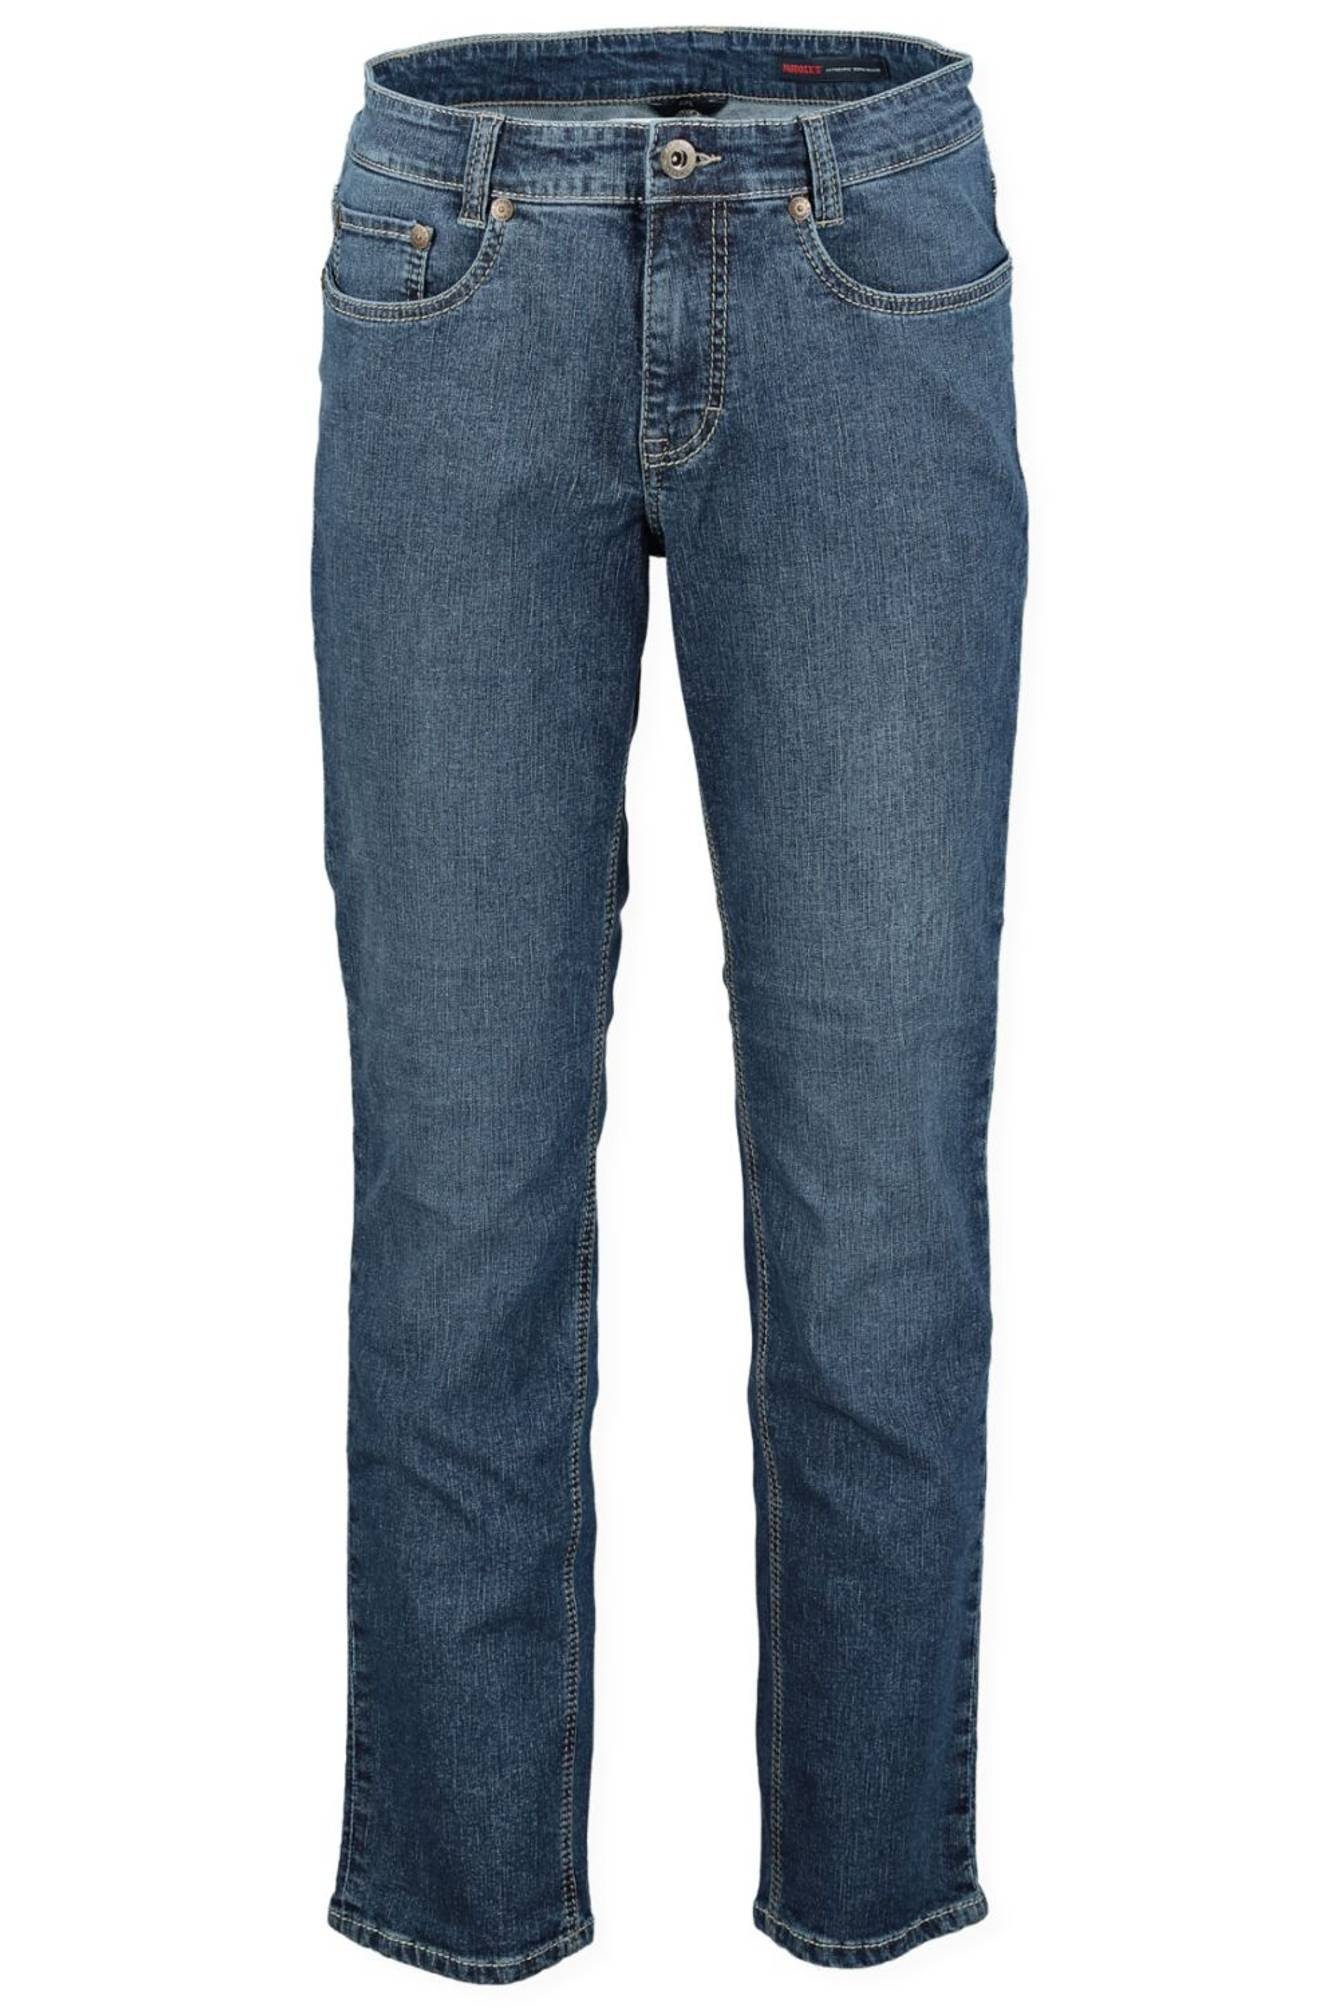 6734 5-Pocket-Jeans mid 000 blue (4349) Paddock's 80227